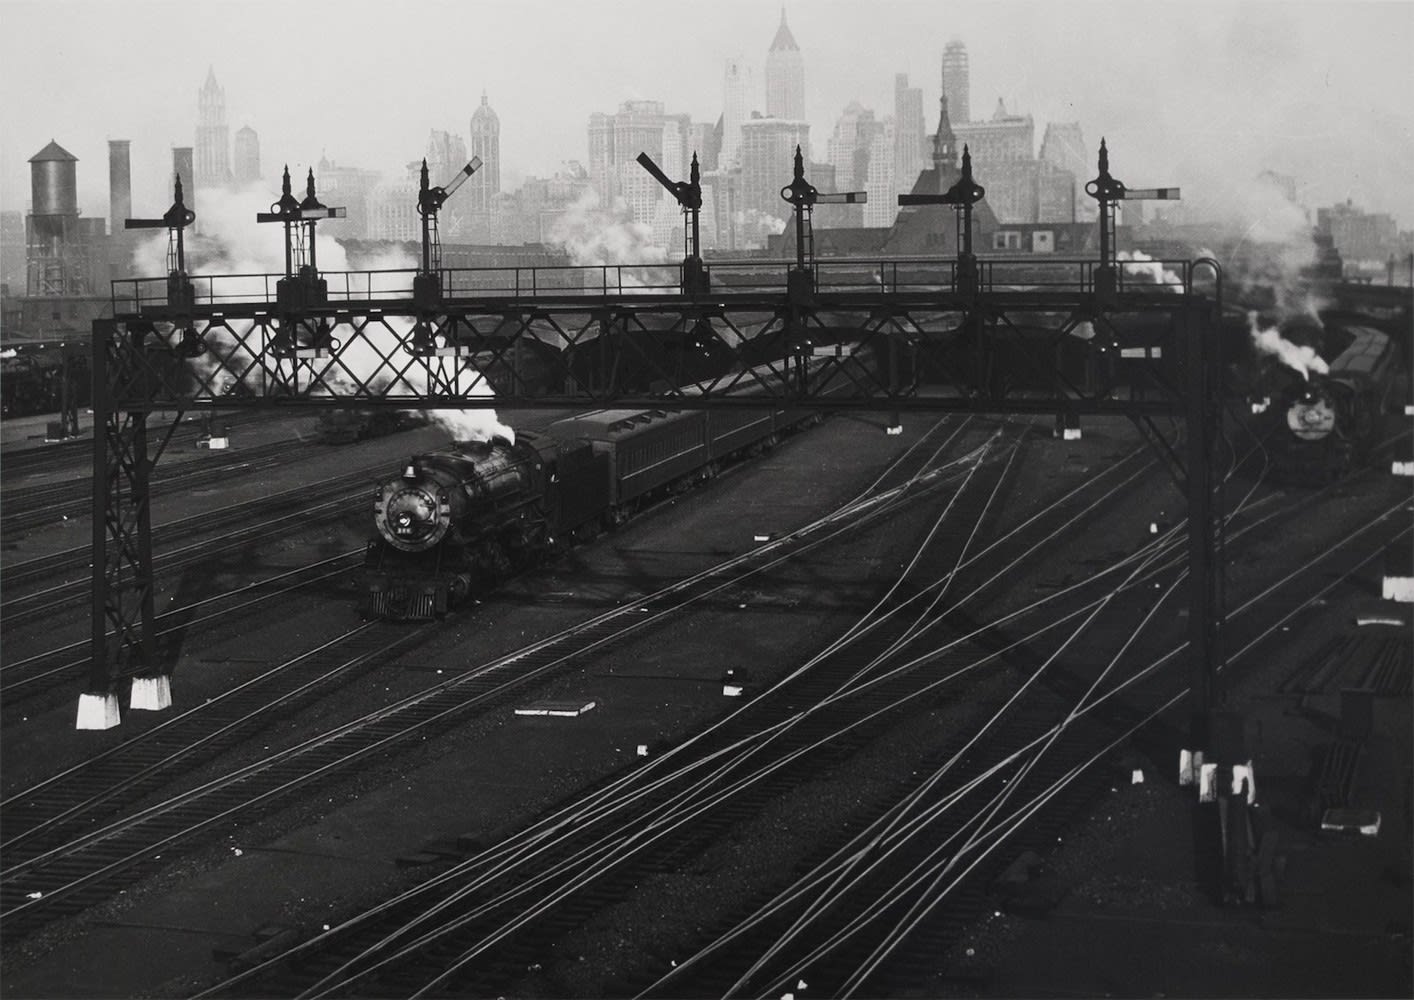 Berenice Abbott Hoboken railroad yards looking towards Manhattan Tirage gélatino-argentique postérieur 25.4 x 35.56 x 0 cm 10 1/4 x 14 3/8 in Dim. papier: 42,4 x 35,5 cm